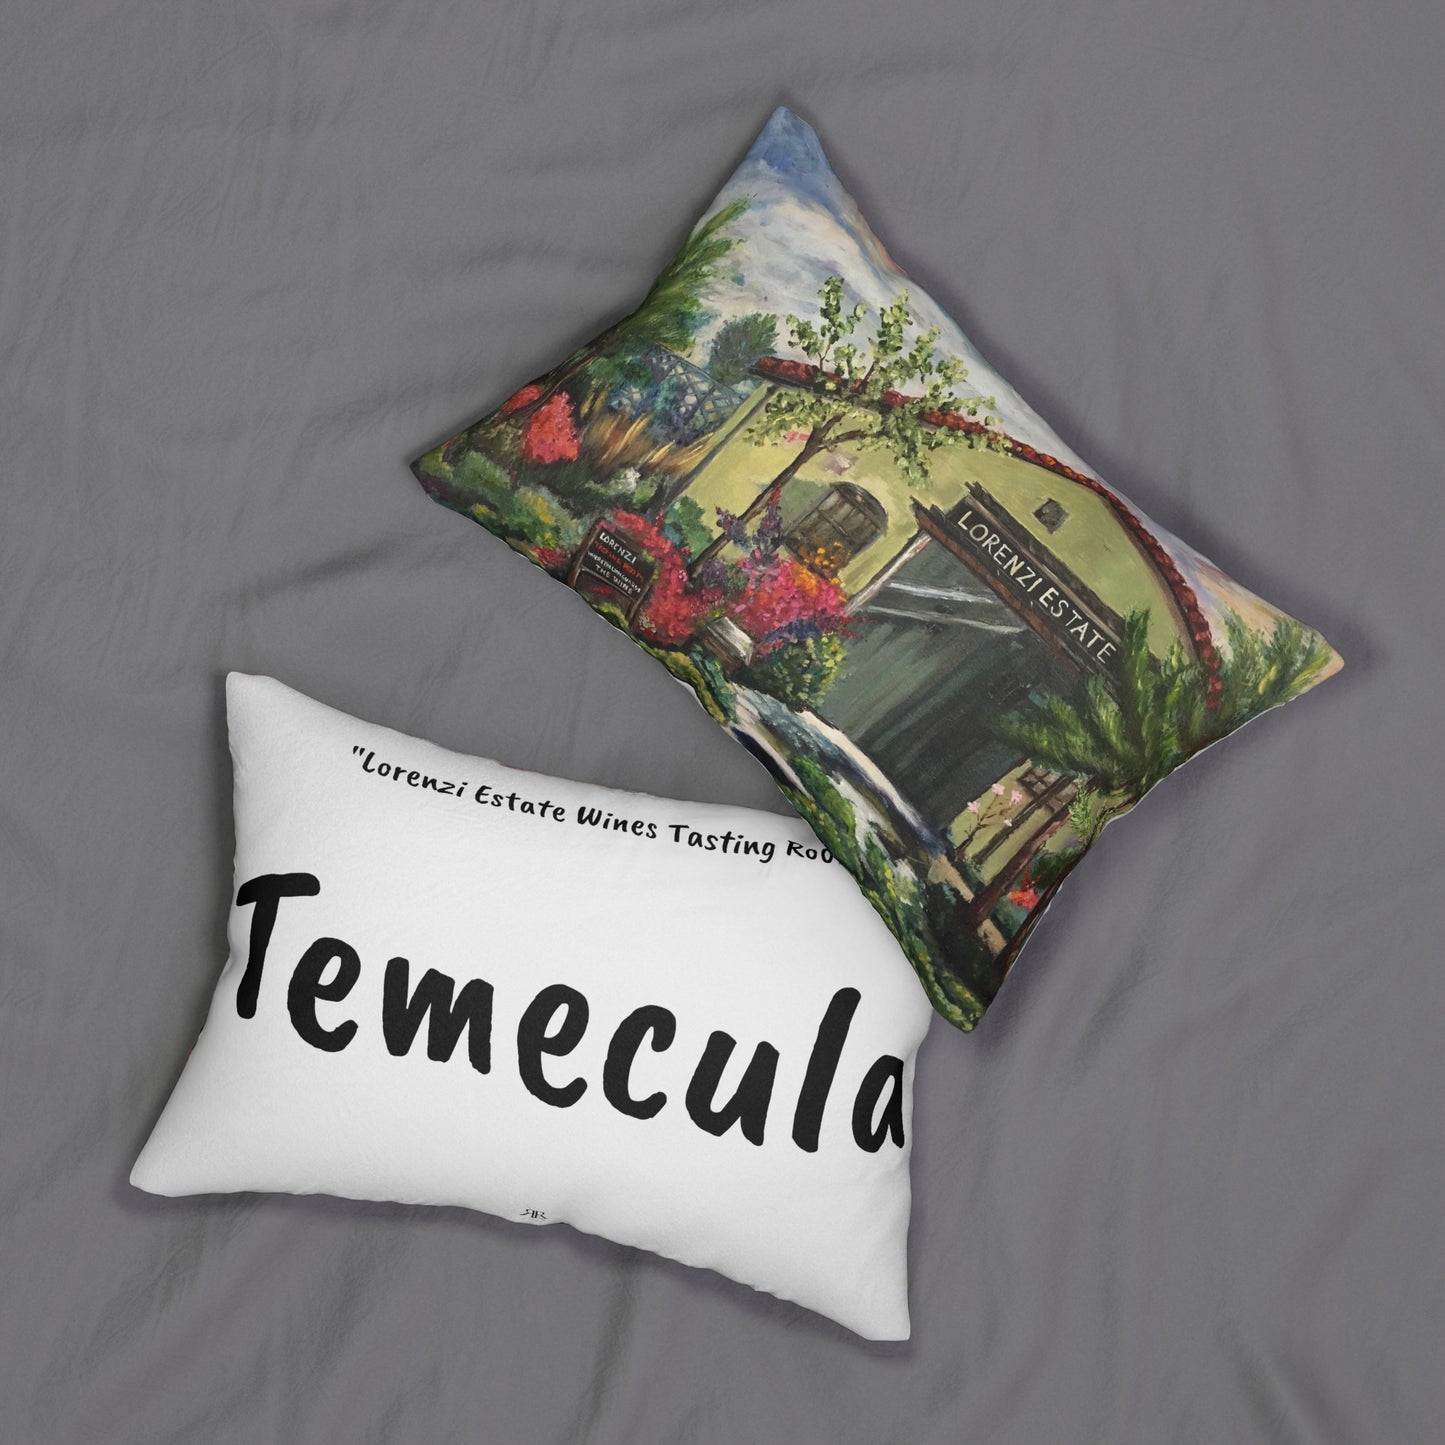 Temecula Lumbar Pillow featuring "Lorenzi Estate Wines Tasting Room" painting and "Temecula"